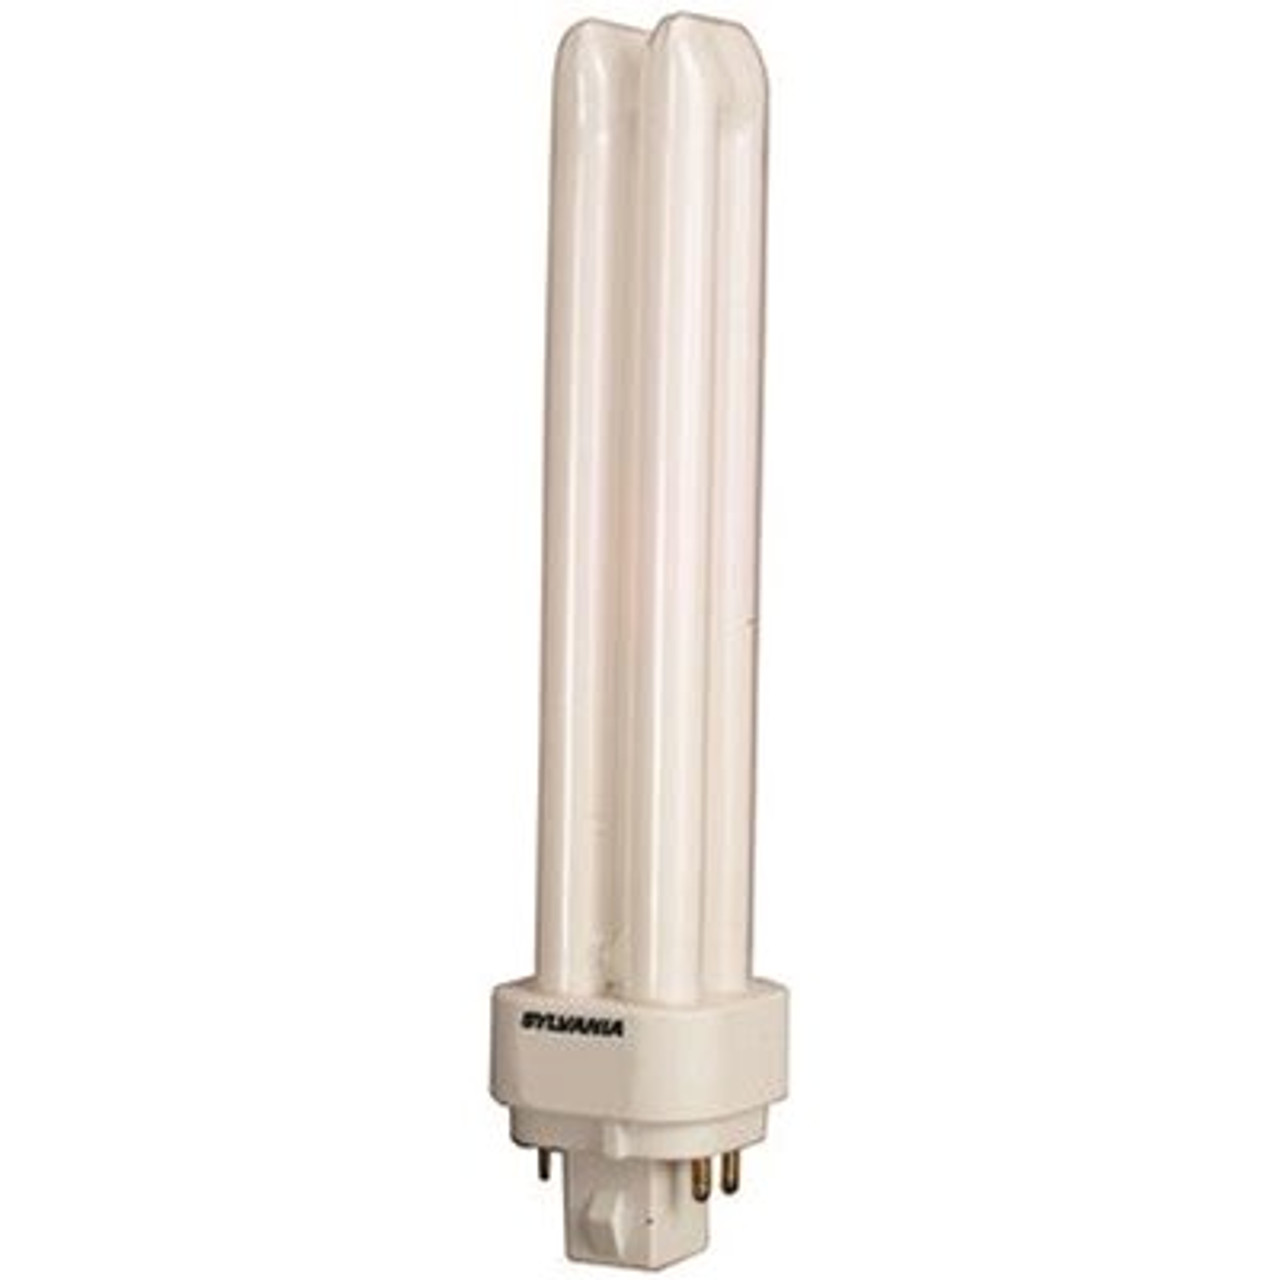 Sylvania 60-Watt Equivalent CFLNI Dimmable, Energy Saving CFL Light Bulb Warm White